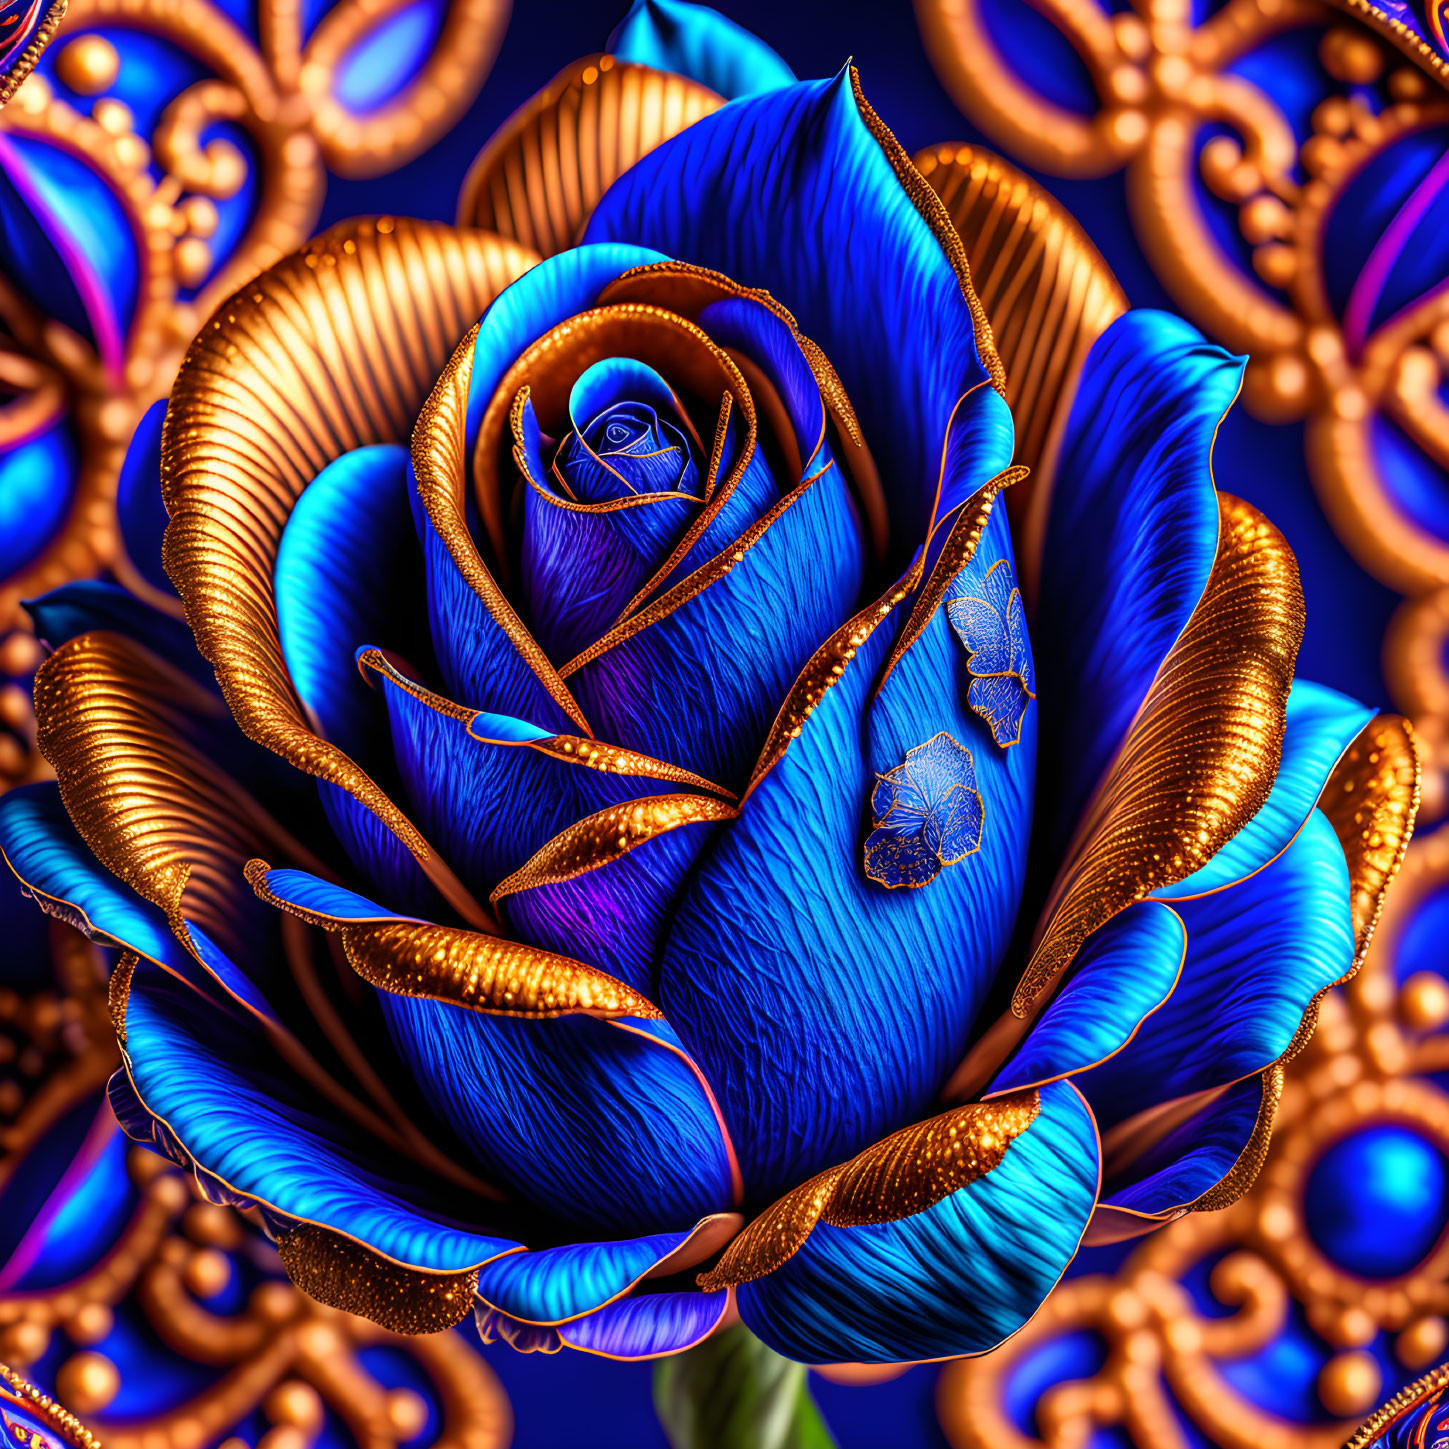 Vibrant digital art: Blue rose with gold-edged petals on ornate mandala background